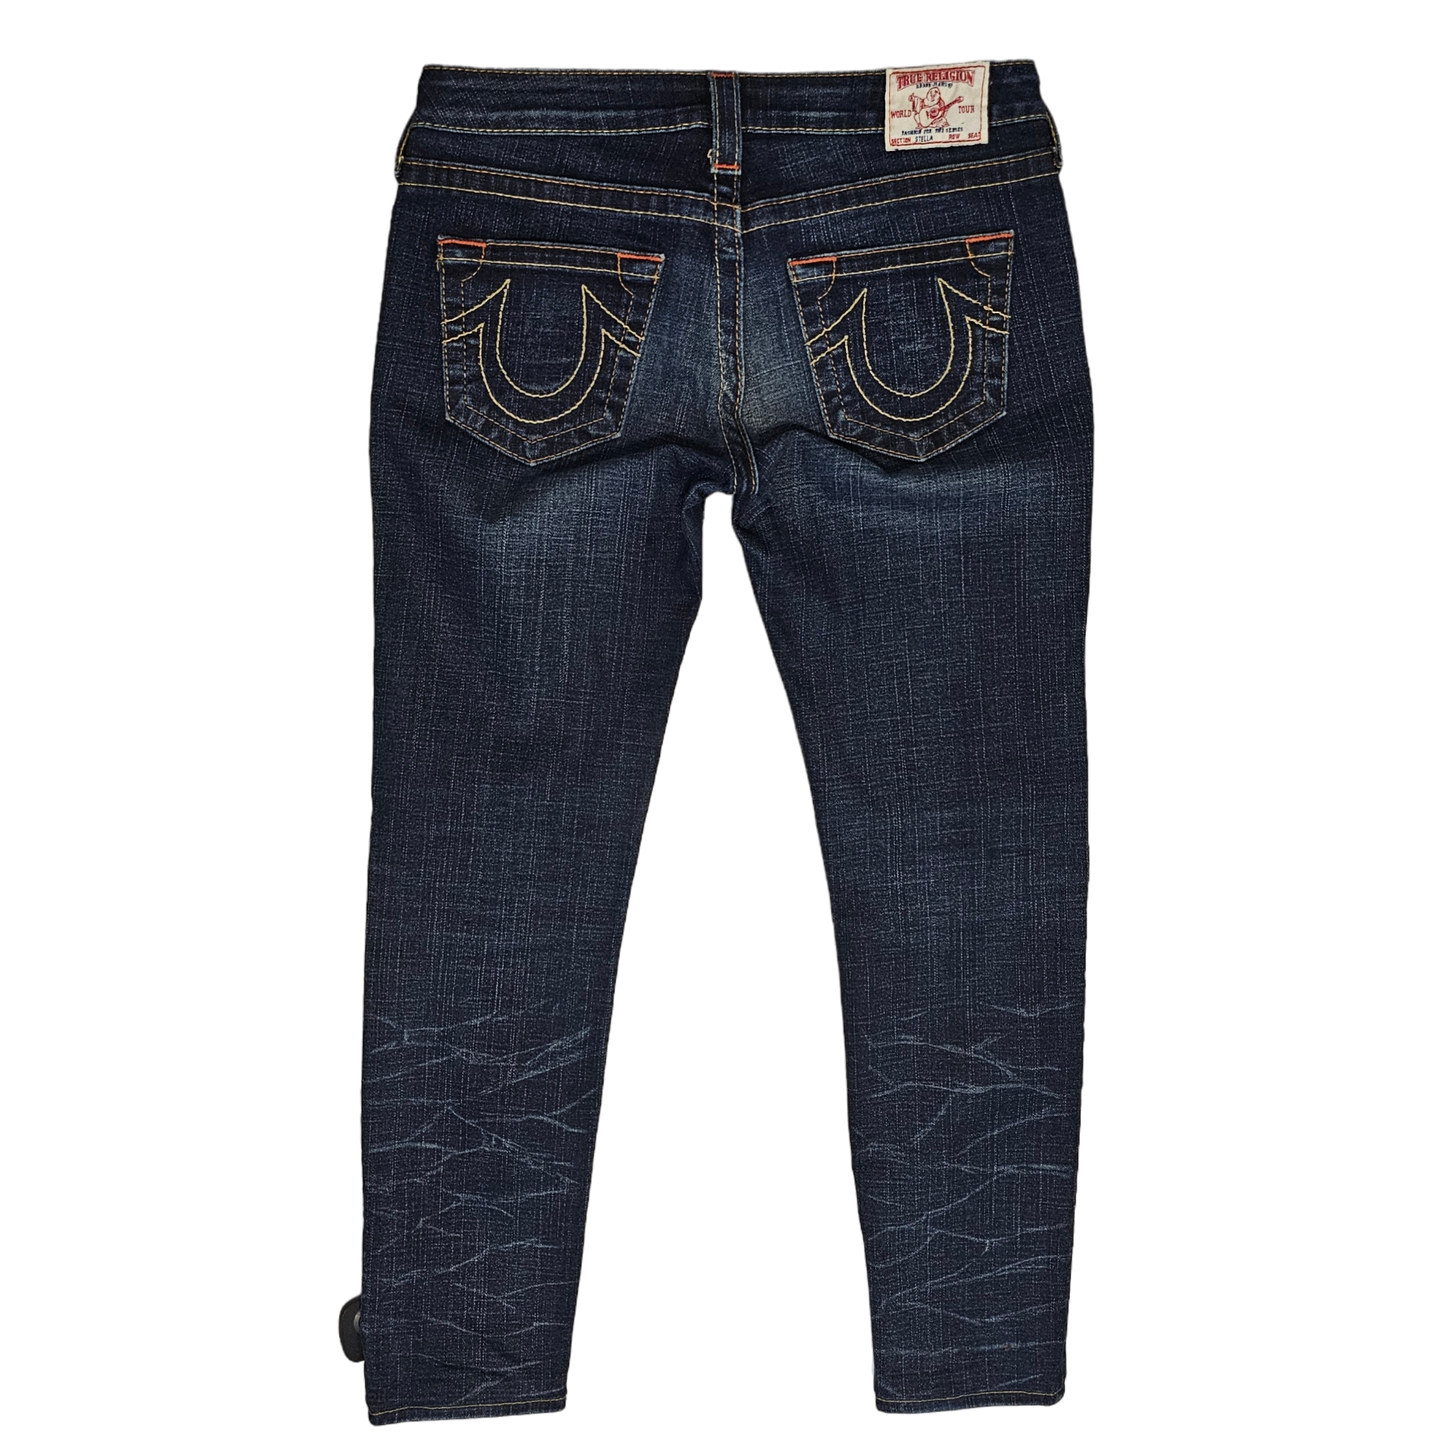 Jeans Designer By True Religion  Size: 28